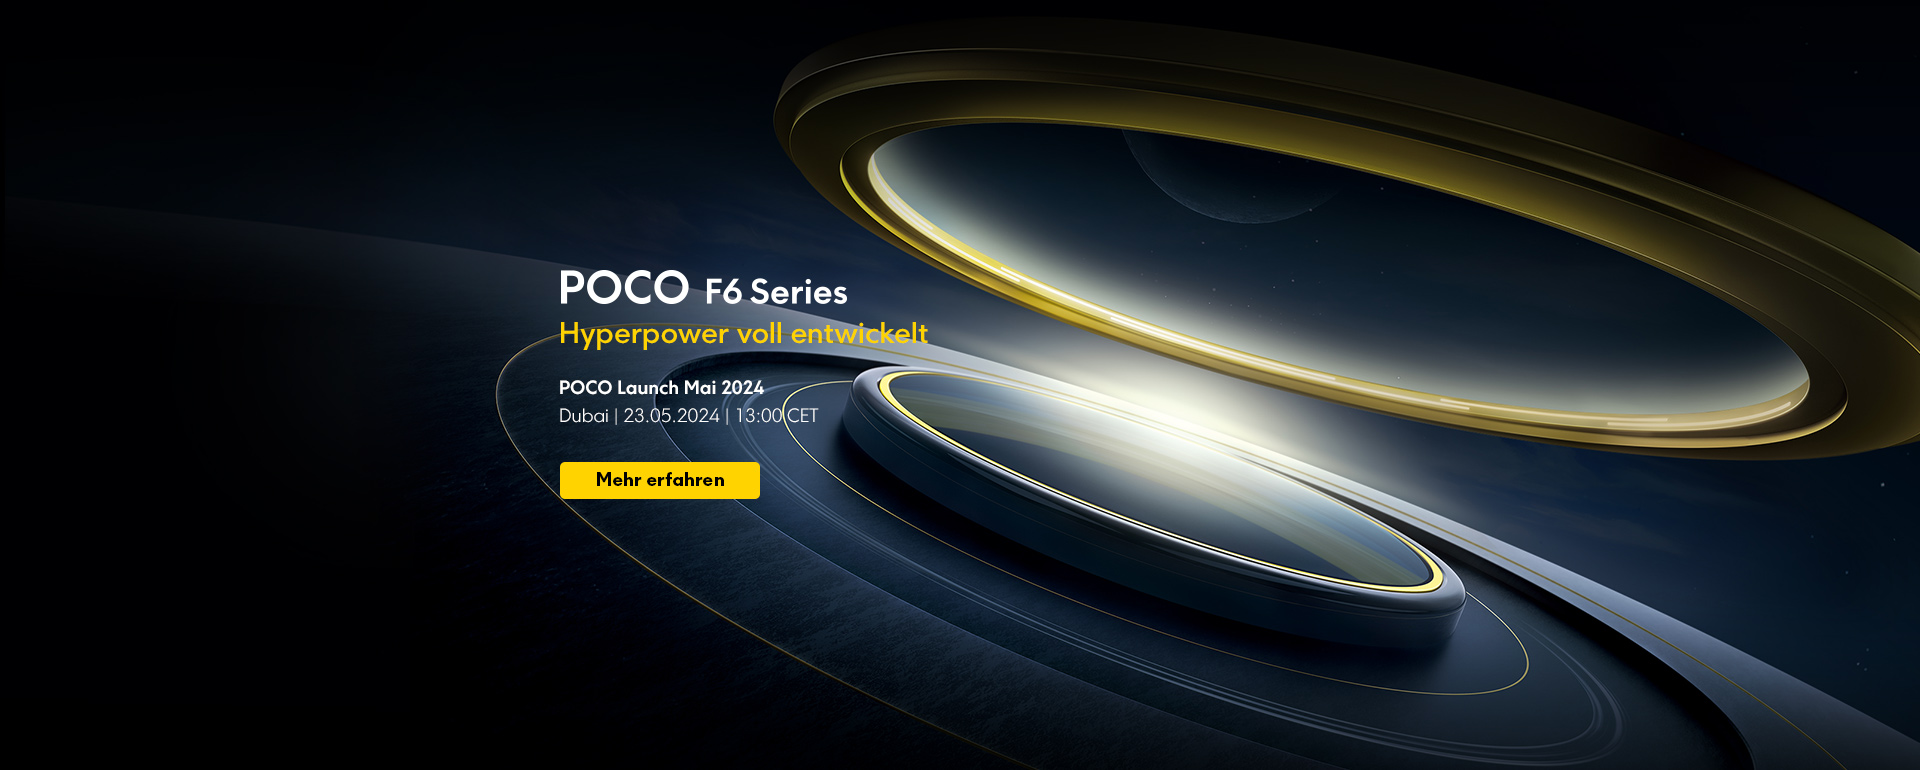 POCO F6 Series